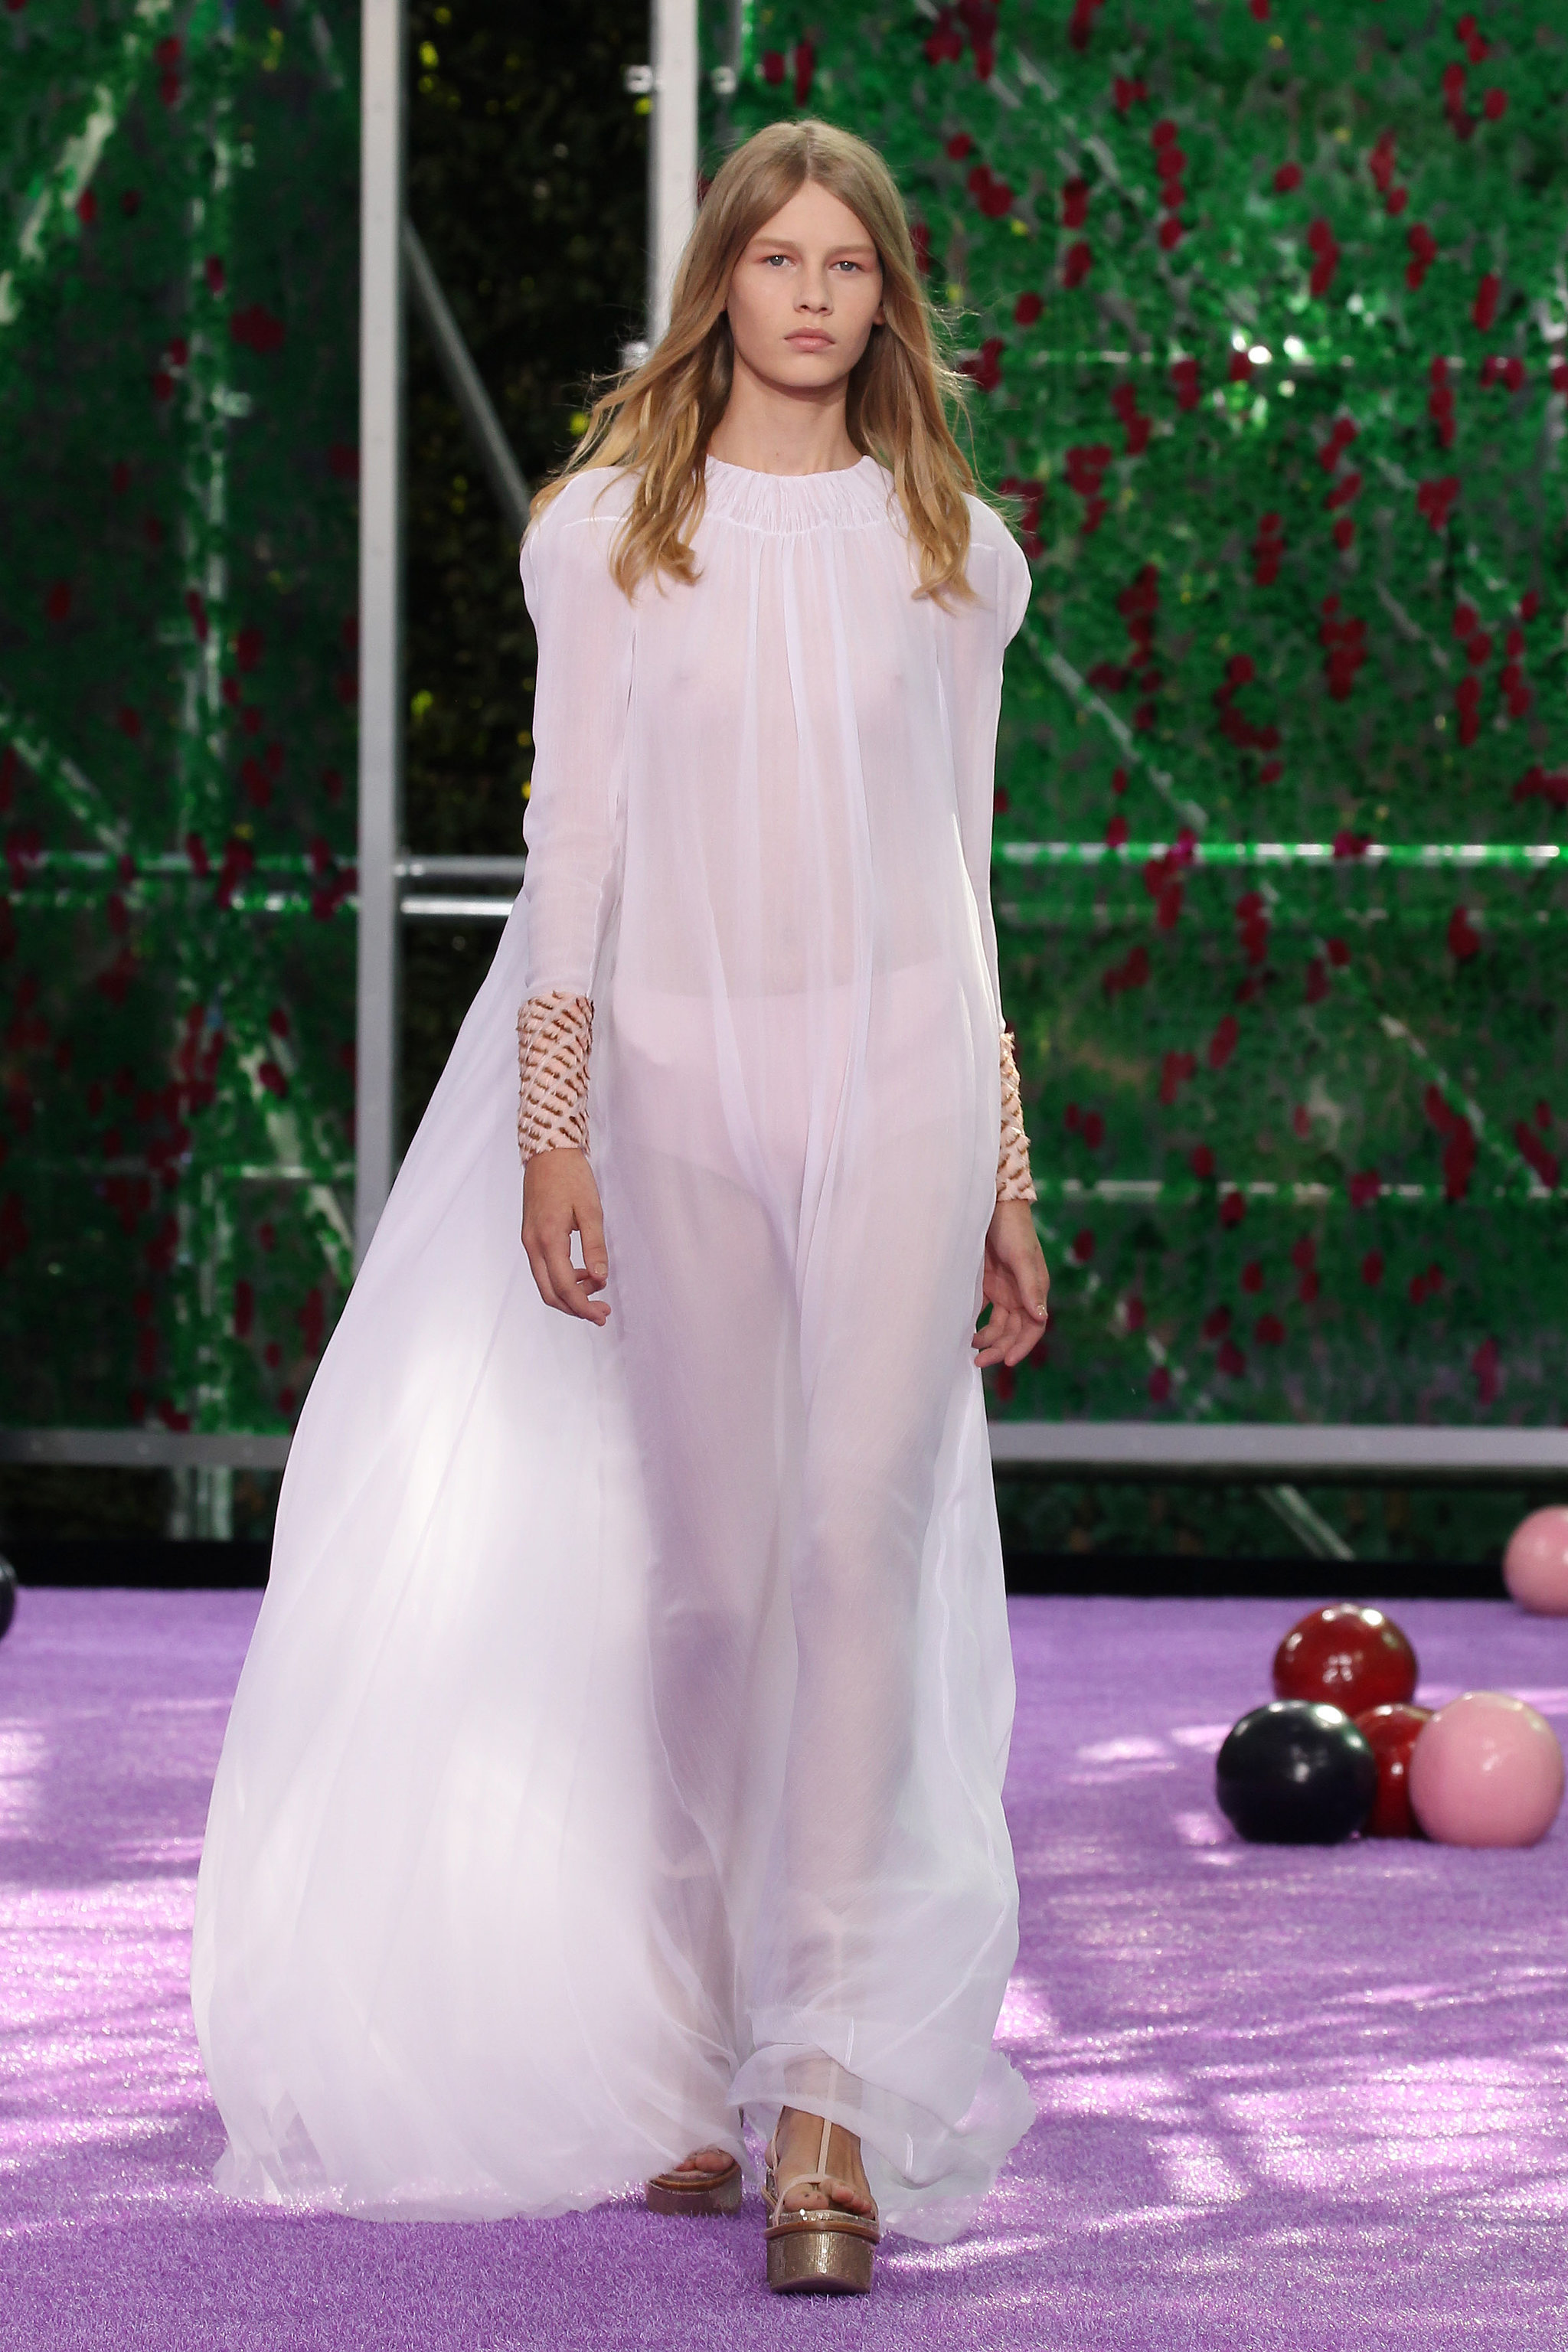 Dior employ 14-year-old Sofia Mechetner as catwalk model 